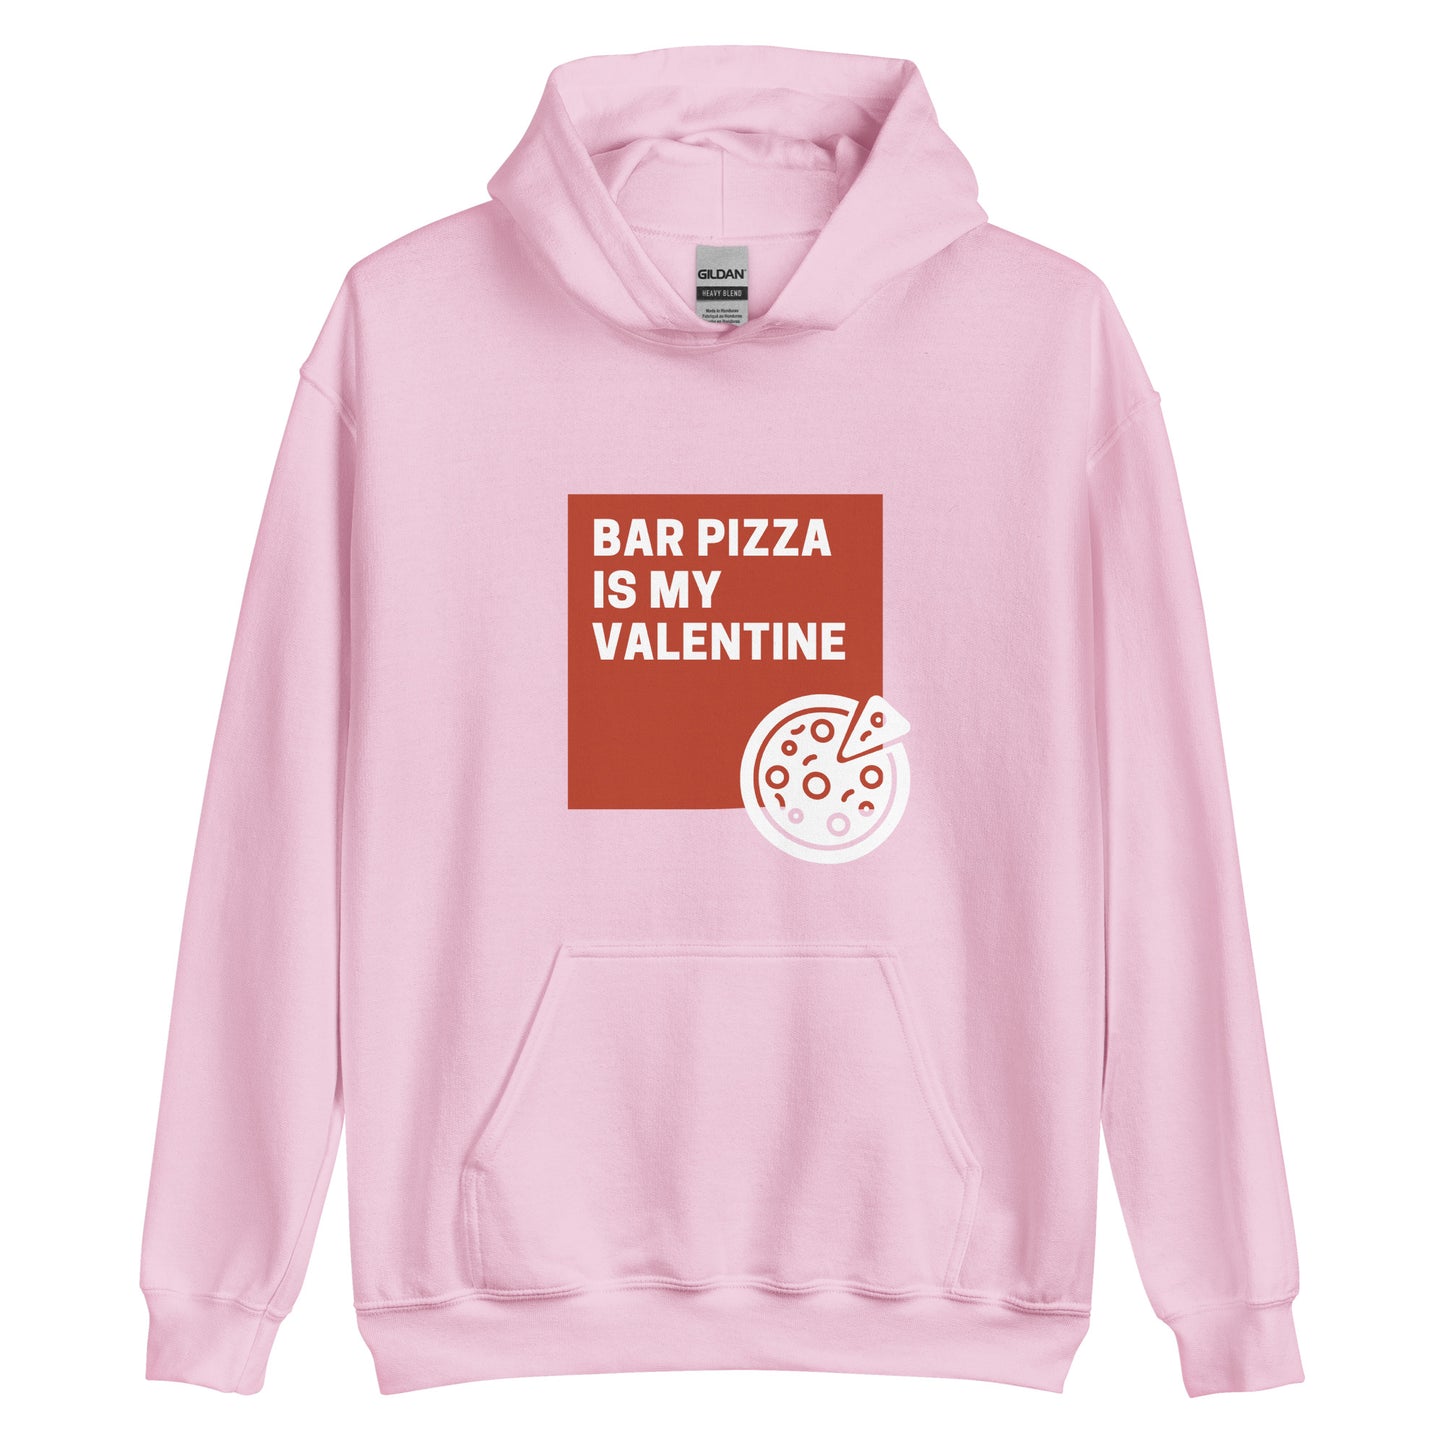 Bar pizza is my valentine Hoodie